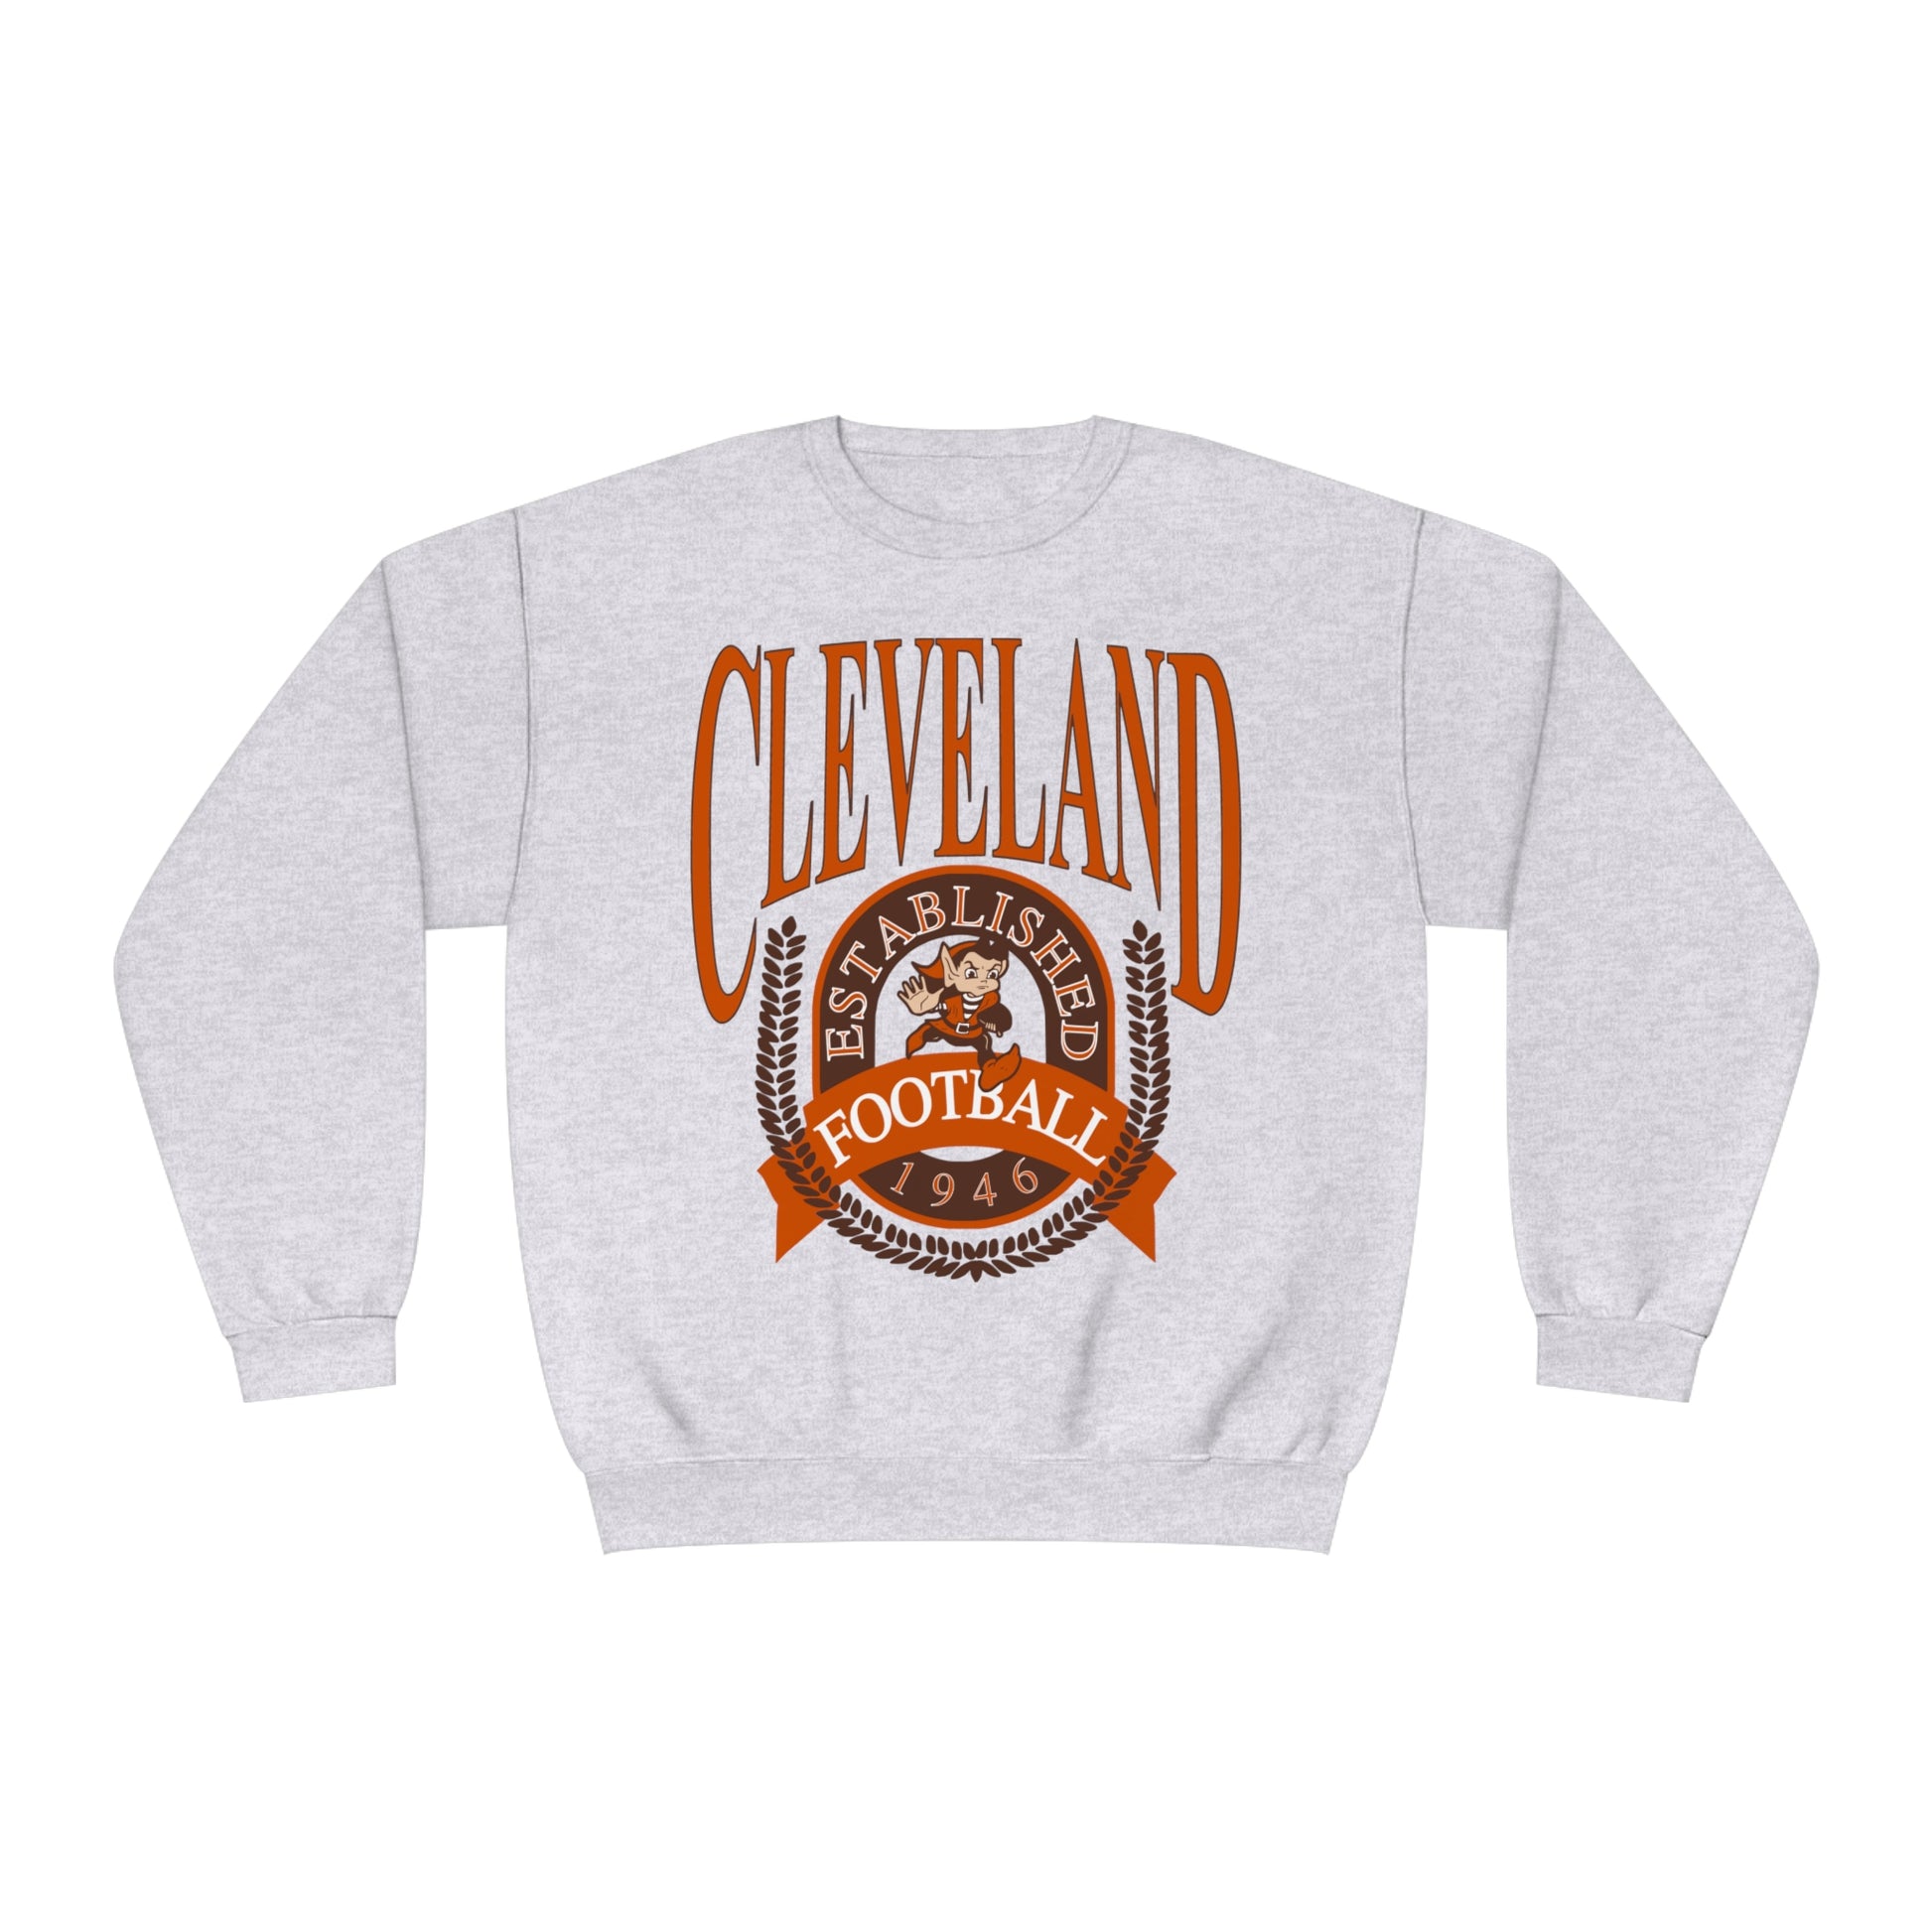 Vintage Cleveland Browns Crewneck Sweatshirt - Retro NFL Football Men's & Women's Dawg Pound Football Hoodie